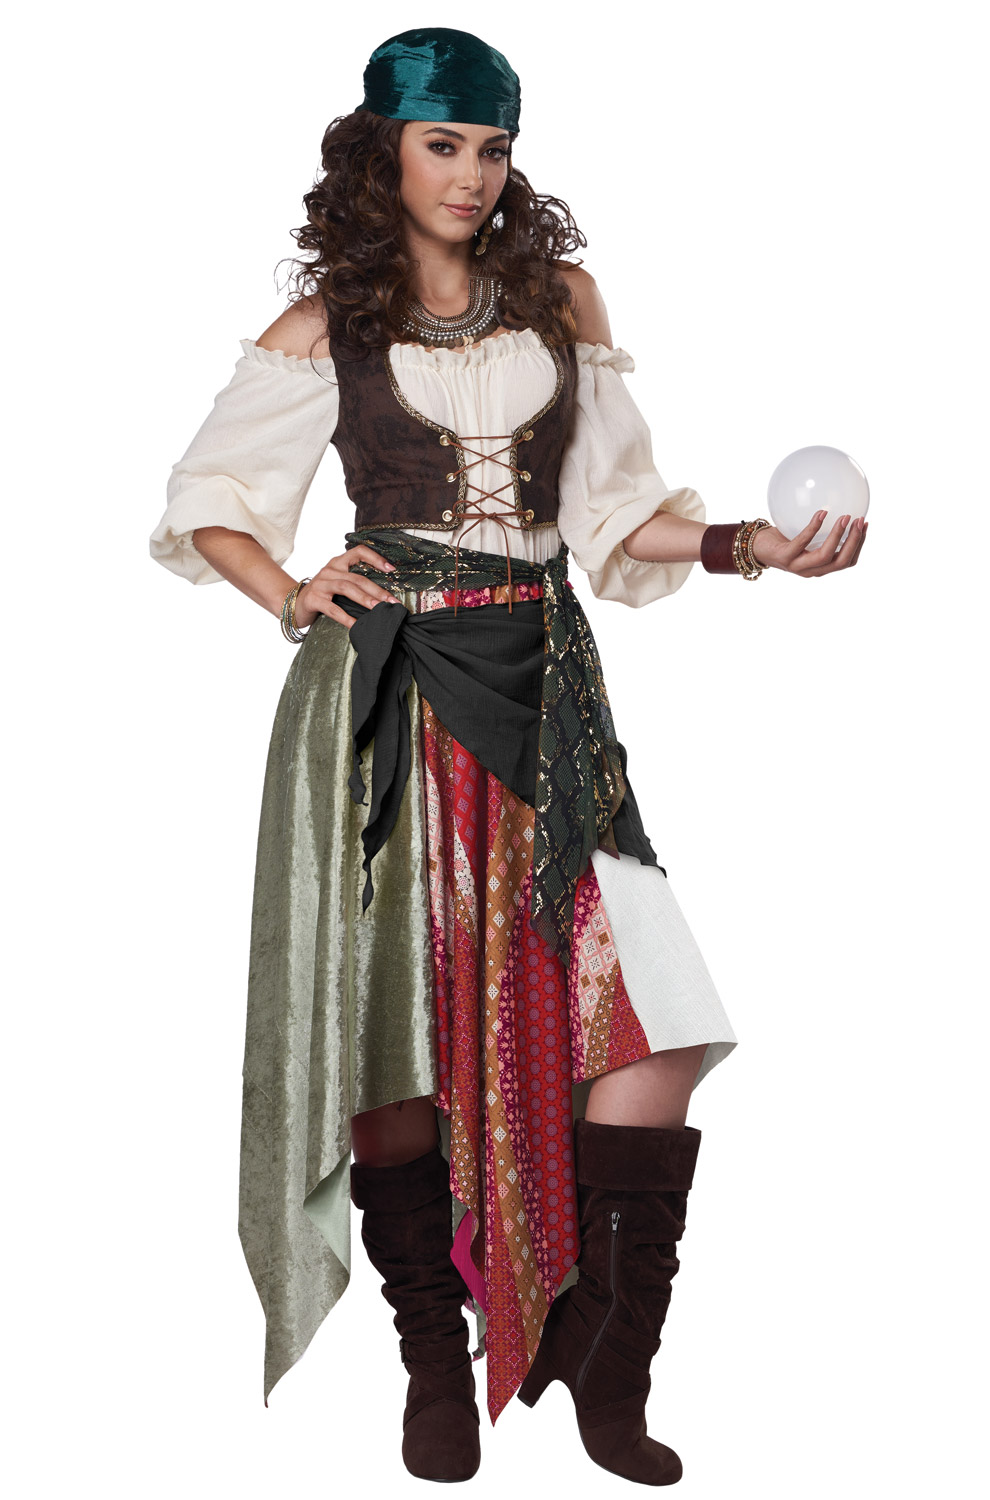 Renaissance Fortune Teller / Pirate Adult Costume at PureCostumes.com. adul...